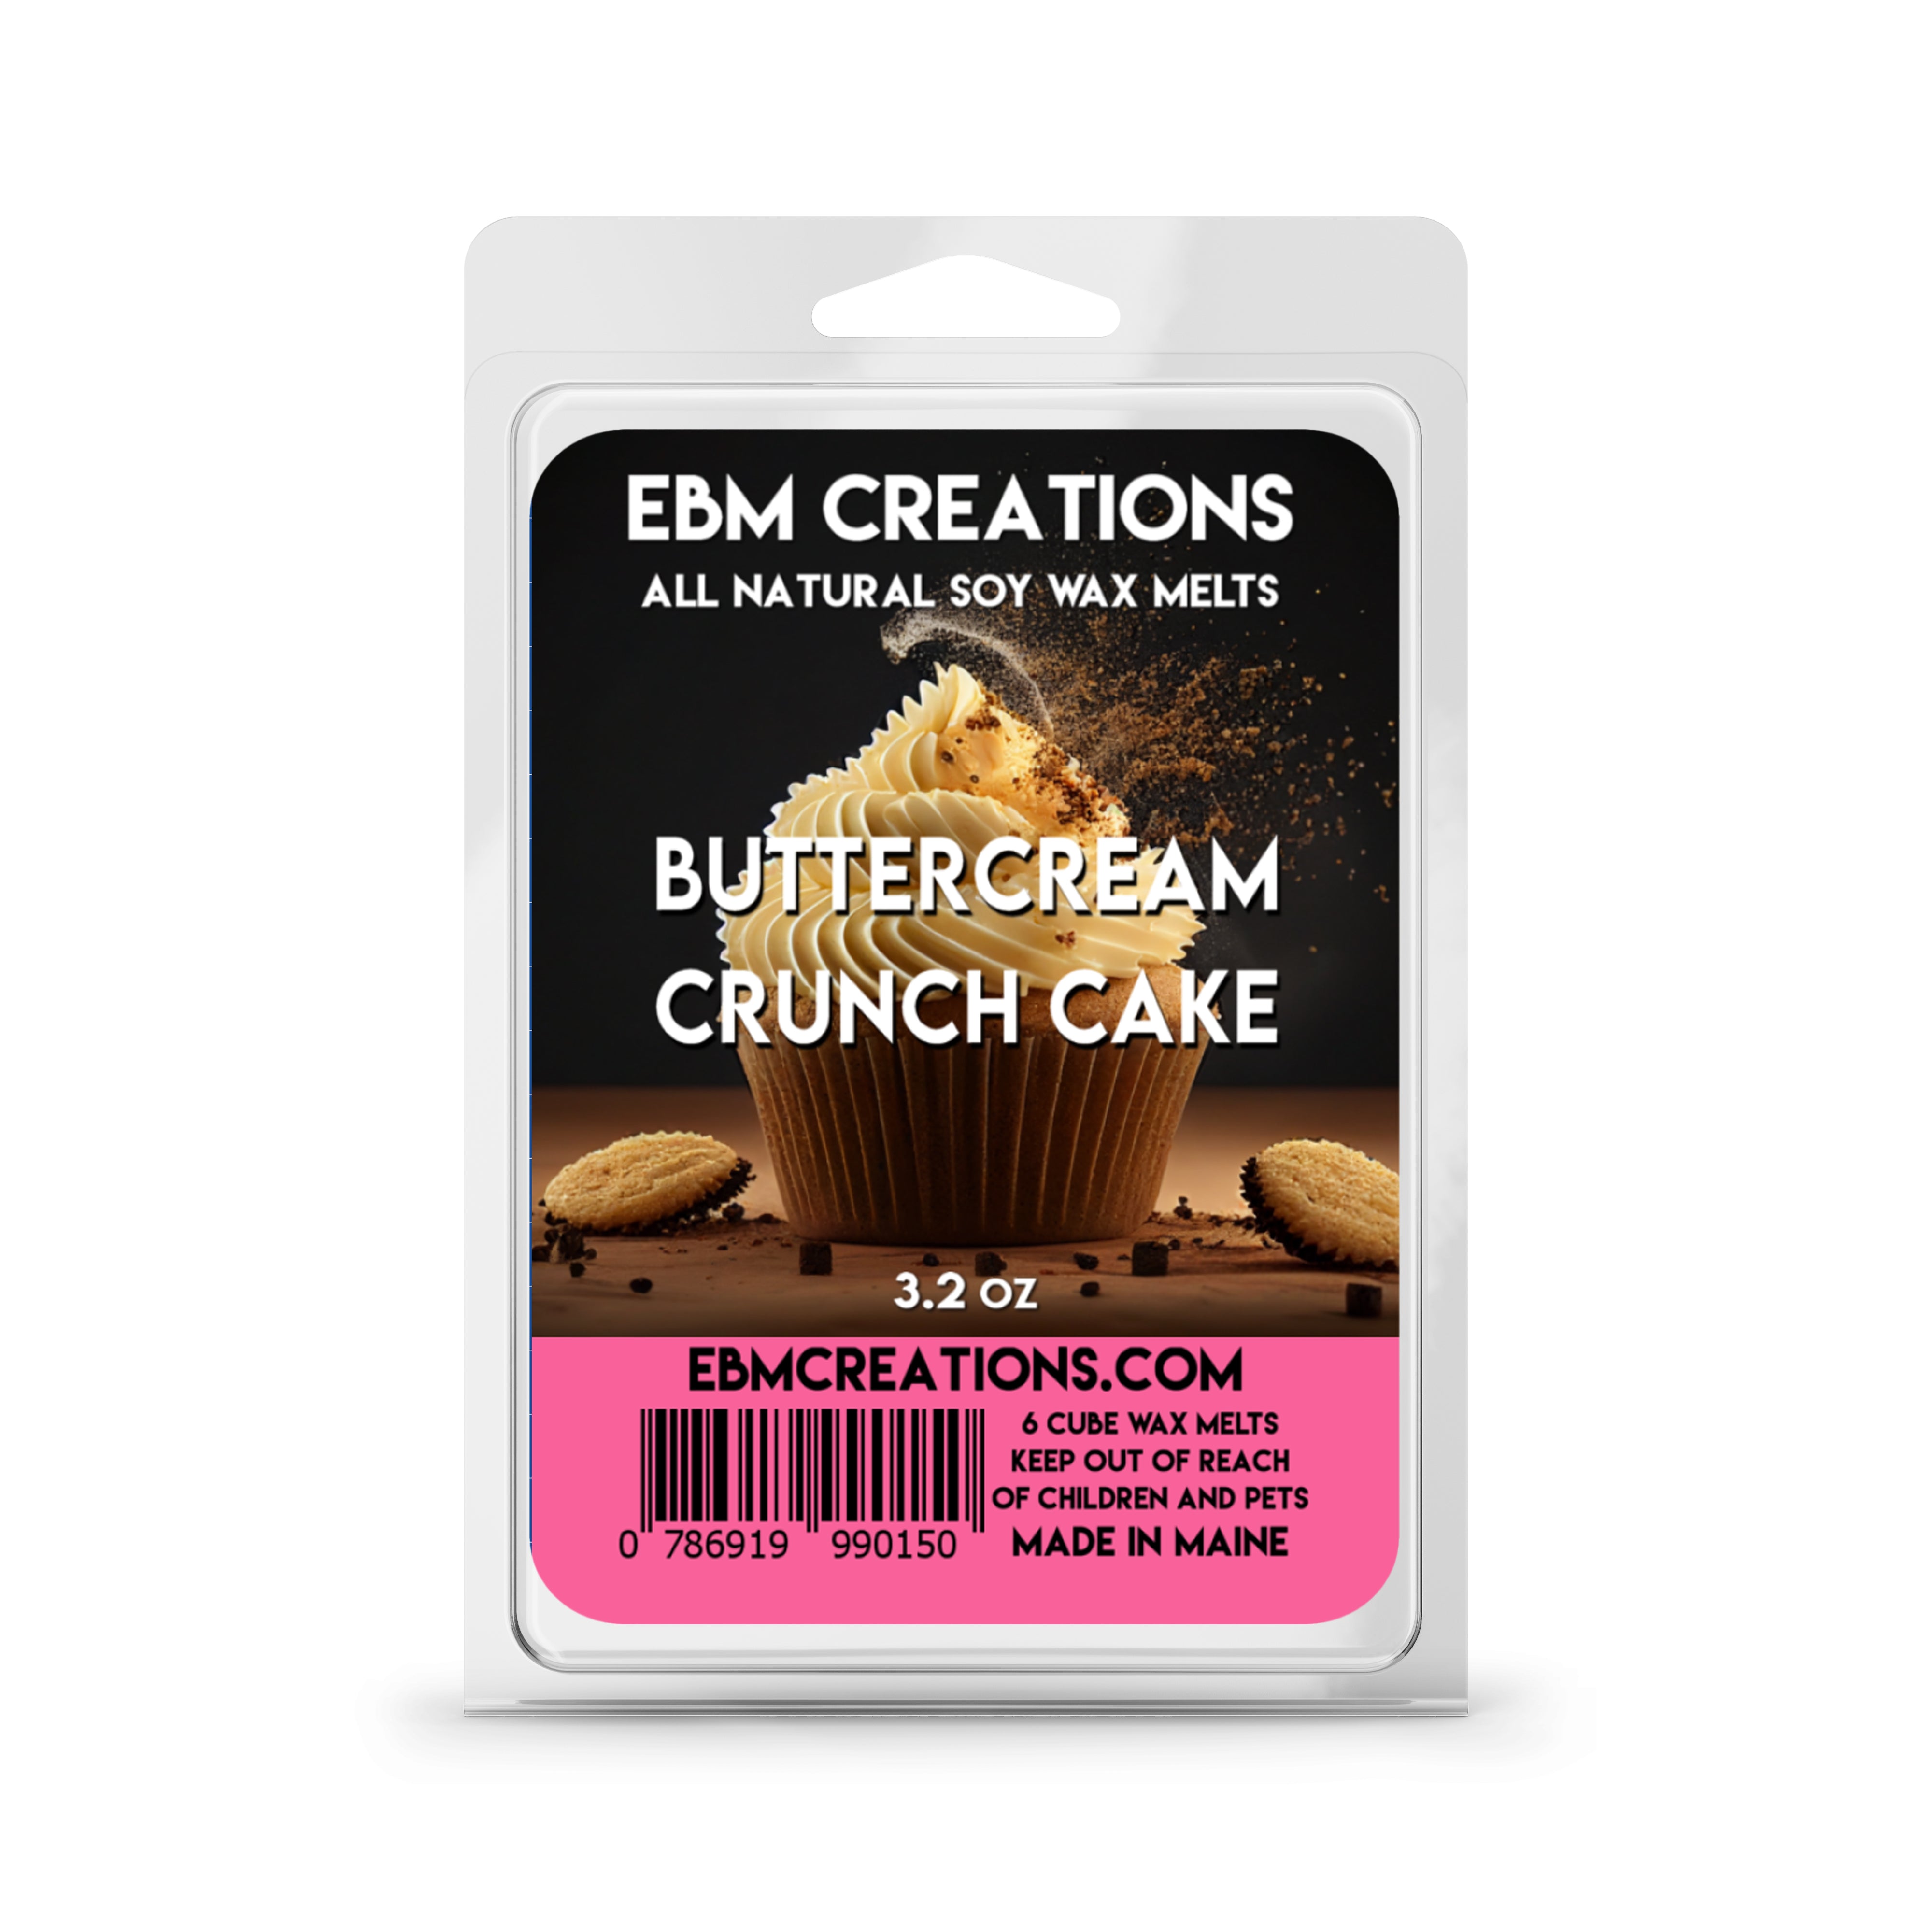 Buttercream Crunch Cake - 3.2 oz Clamshell